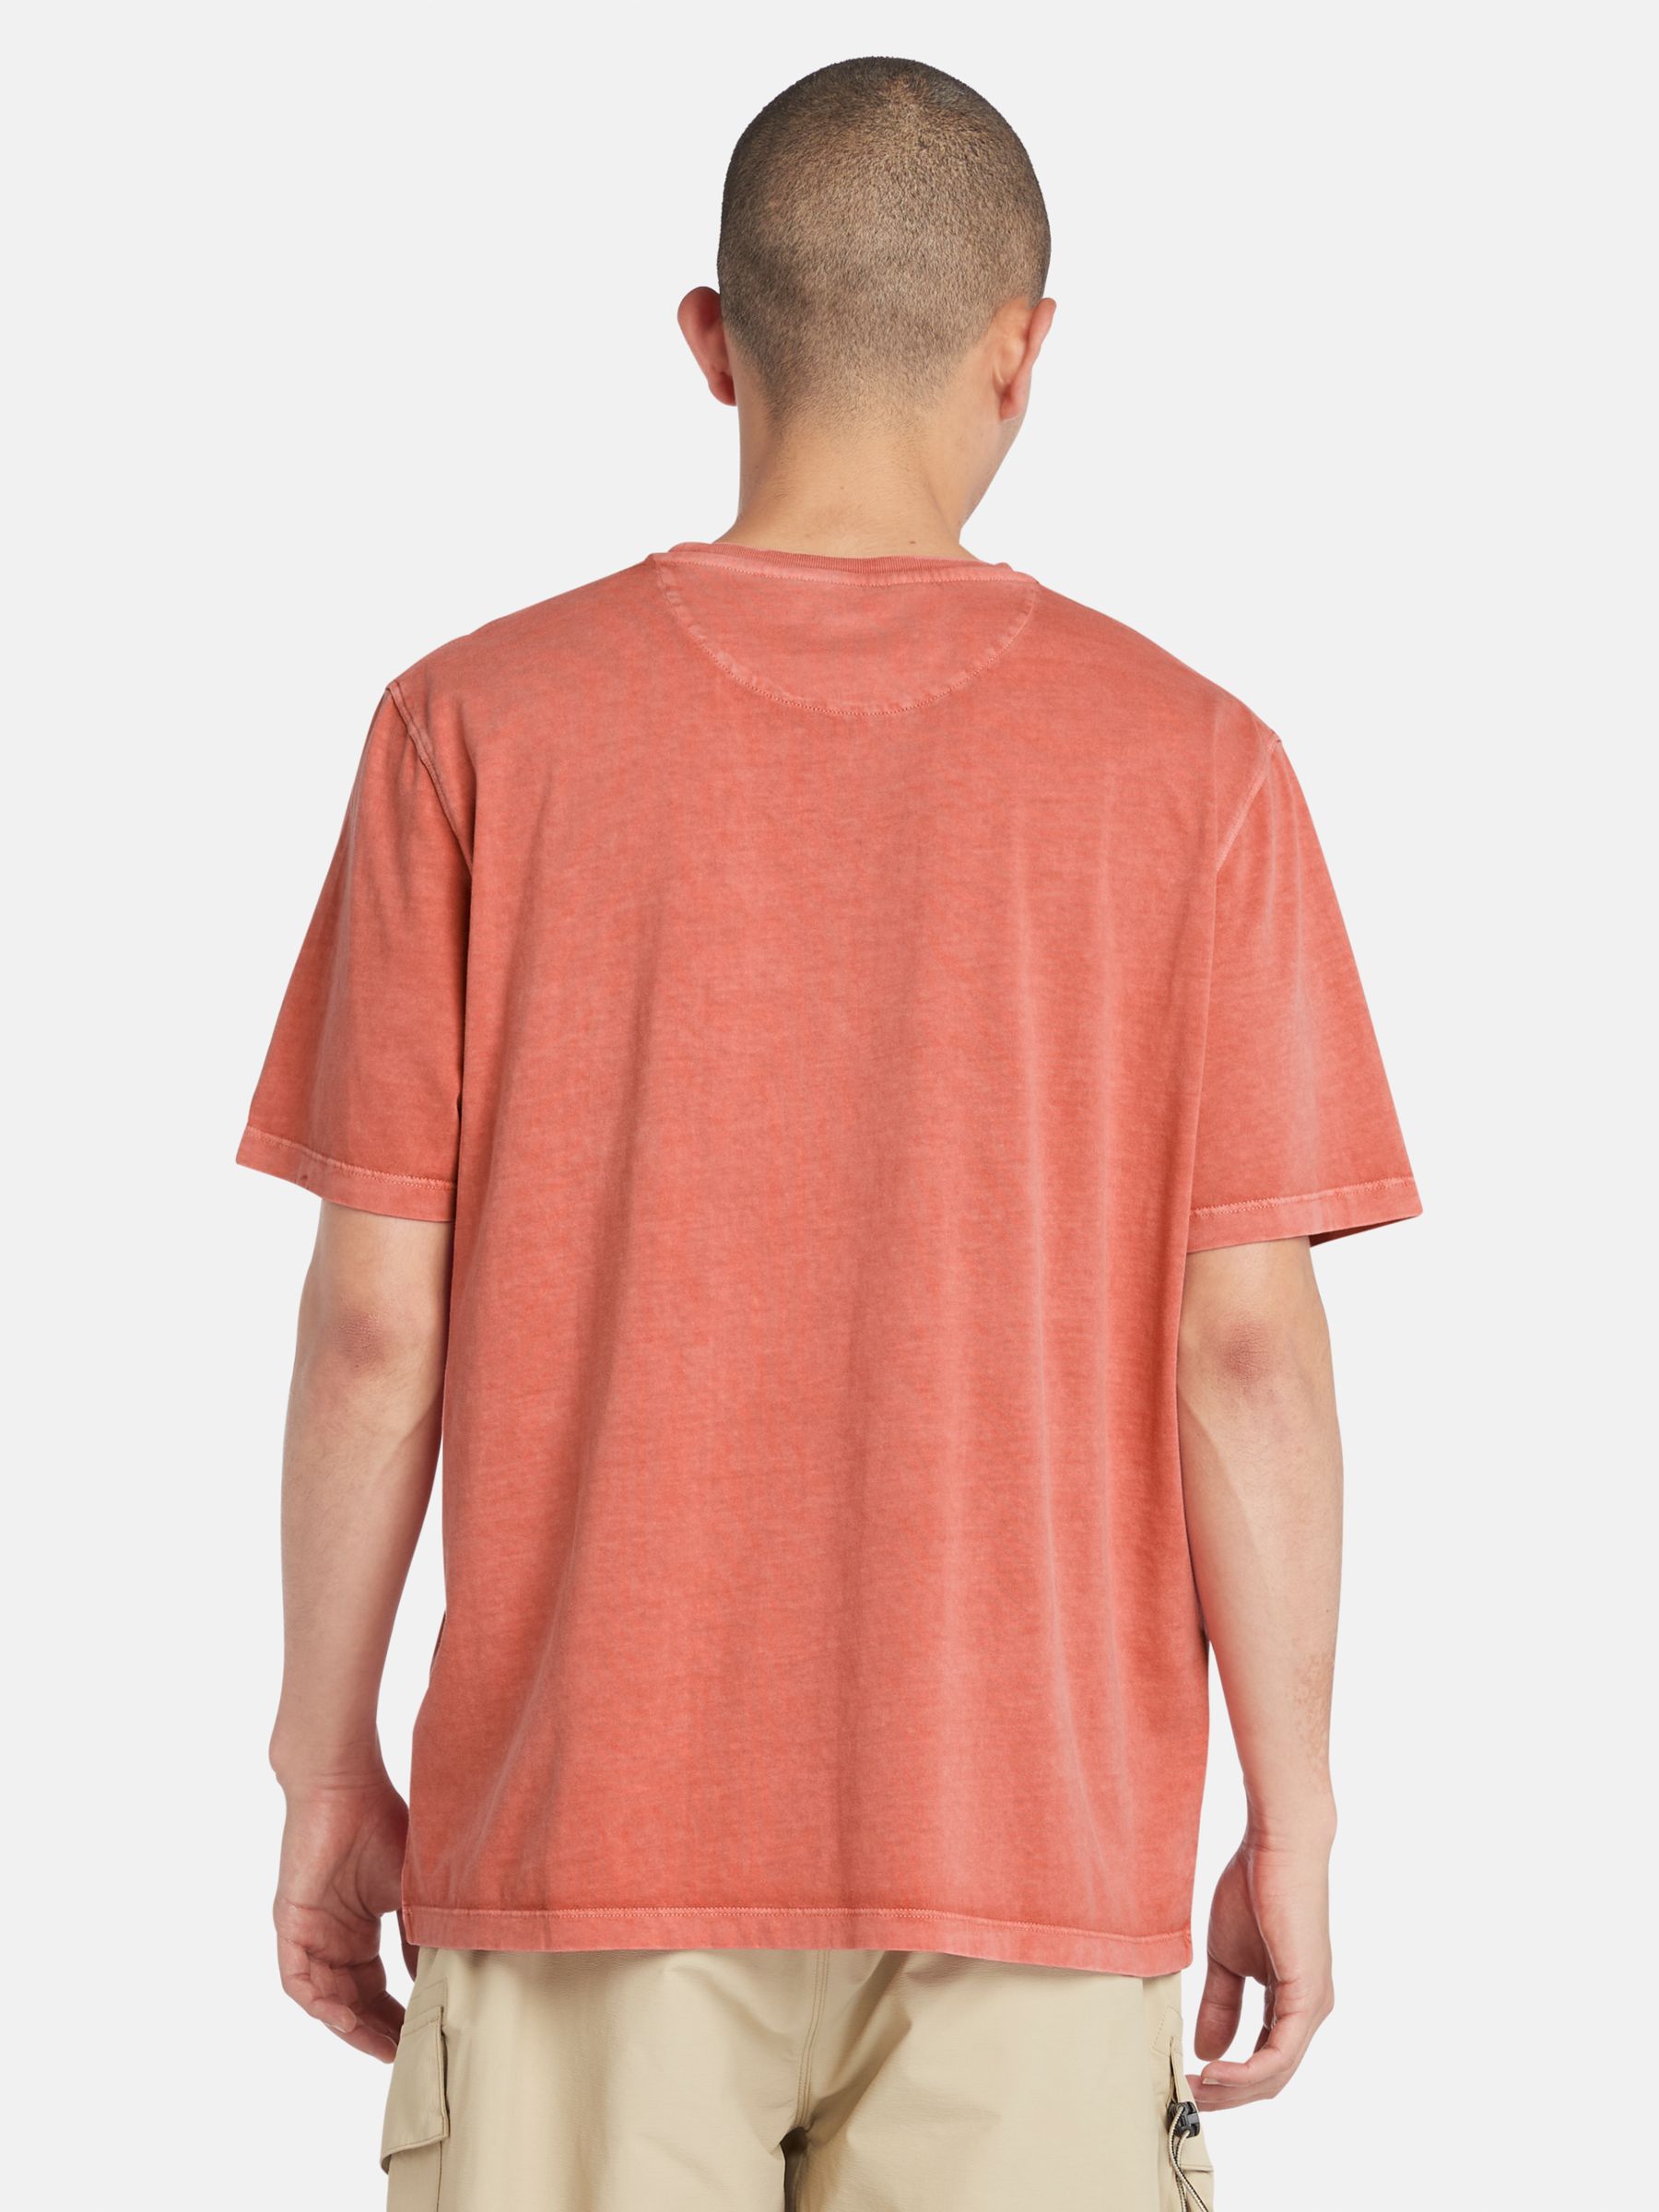 Timberland Dye Short Sleeve T-Shirt, Burnt Sienna, S